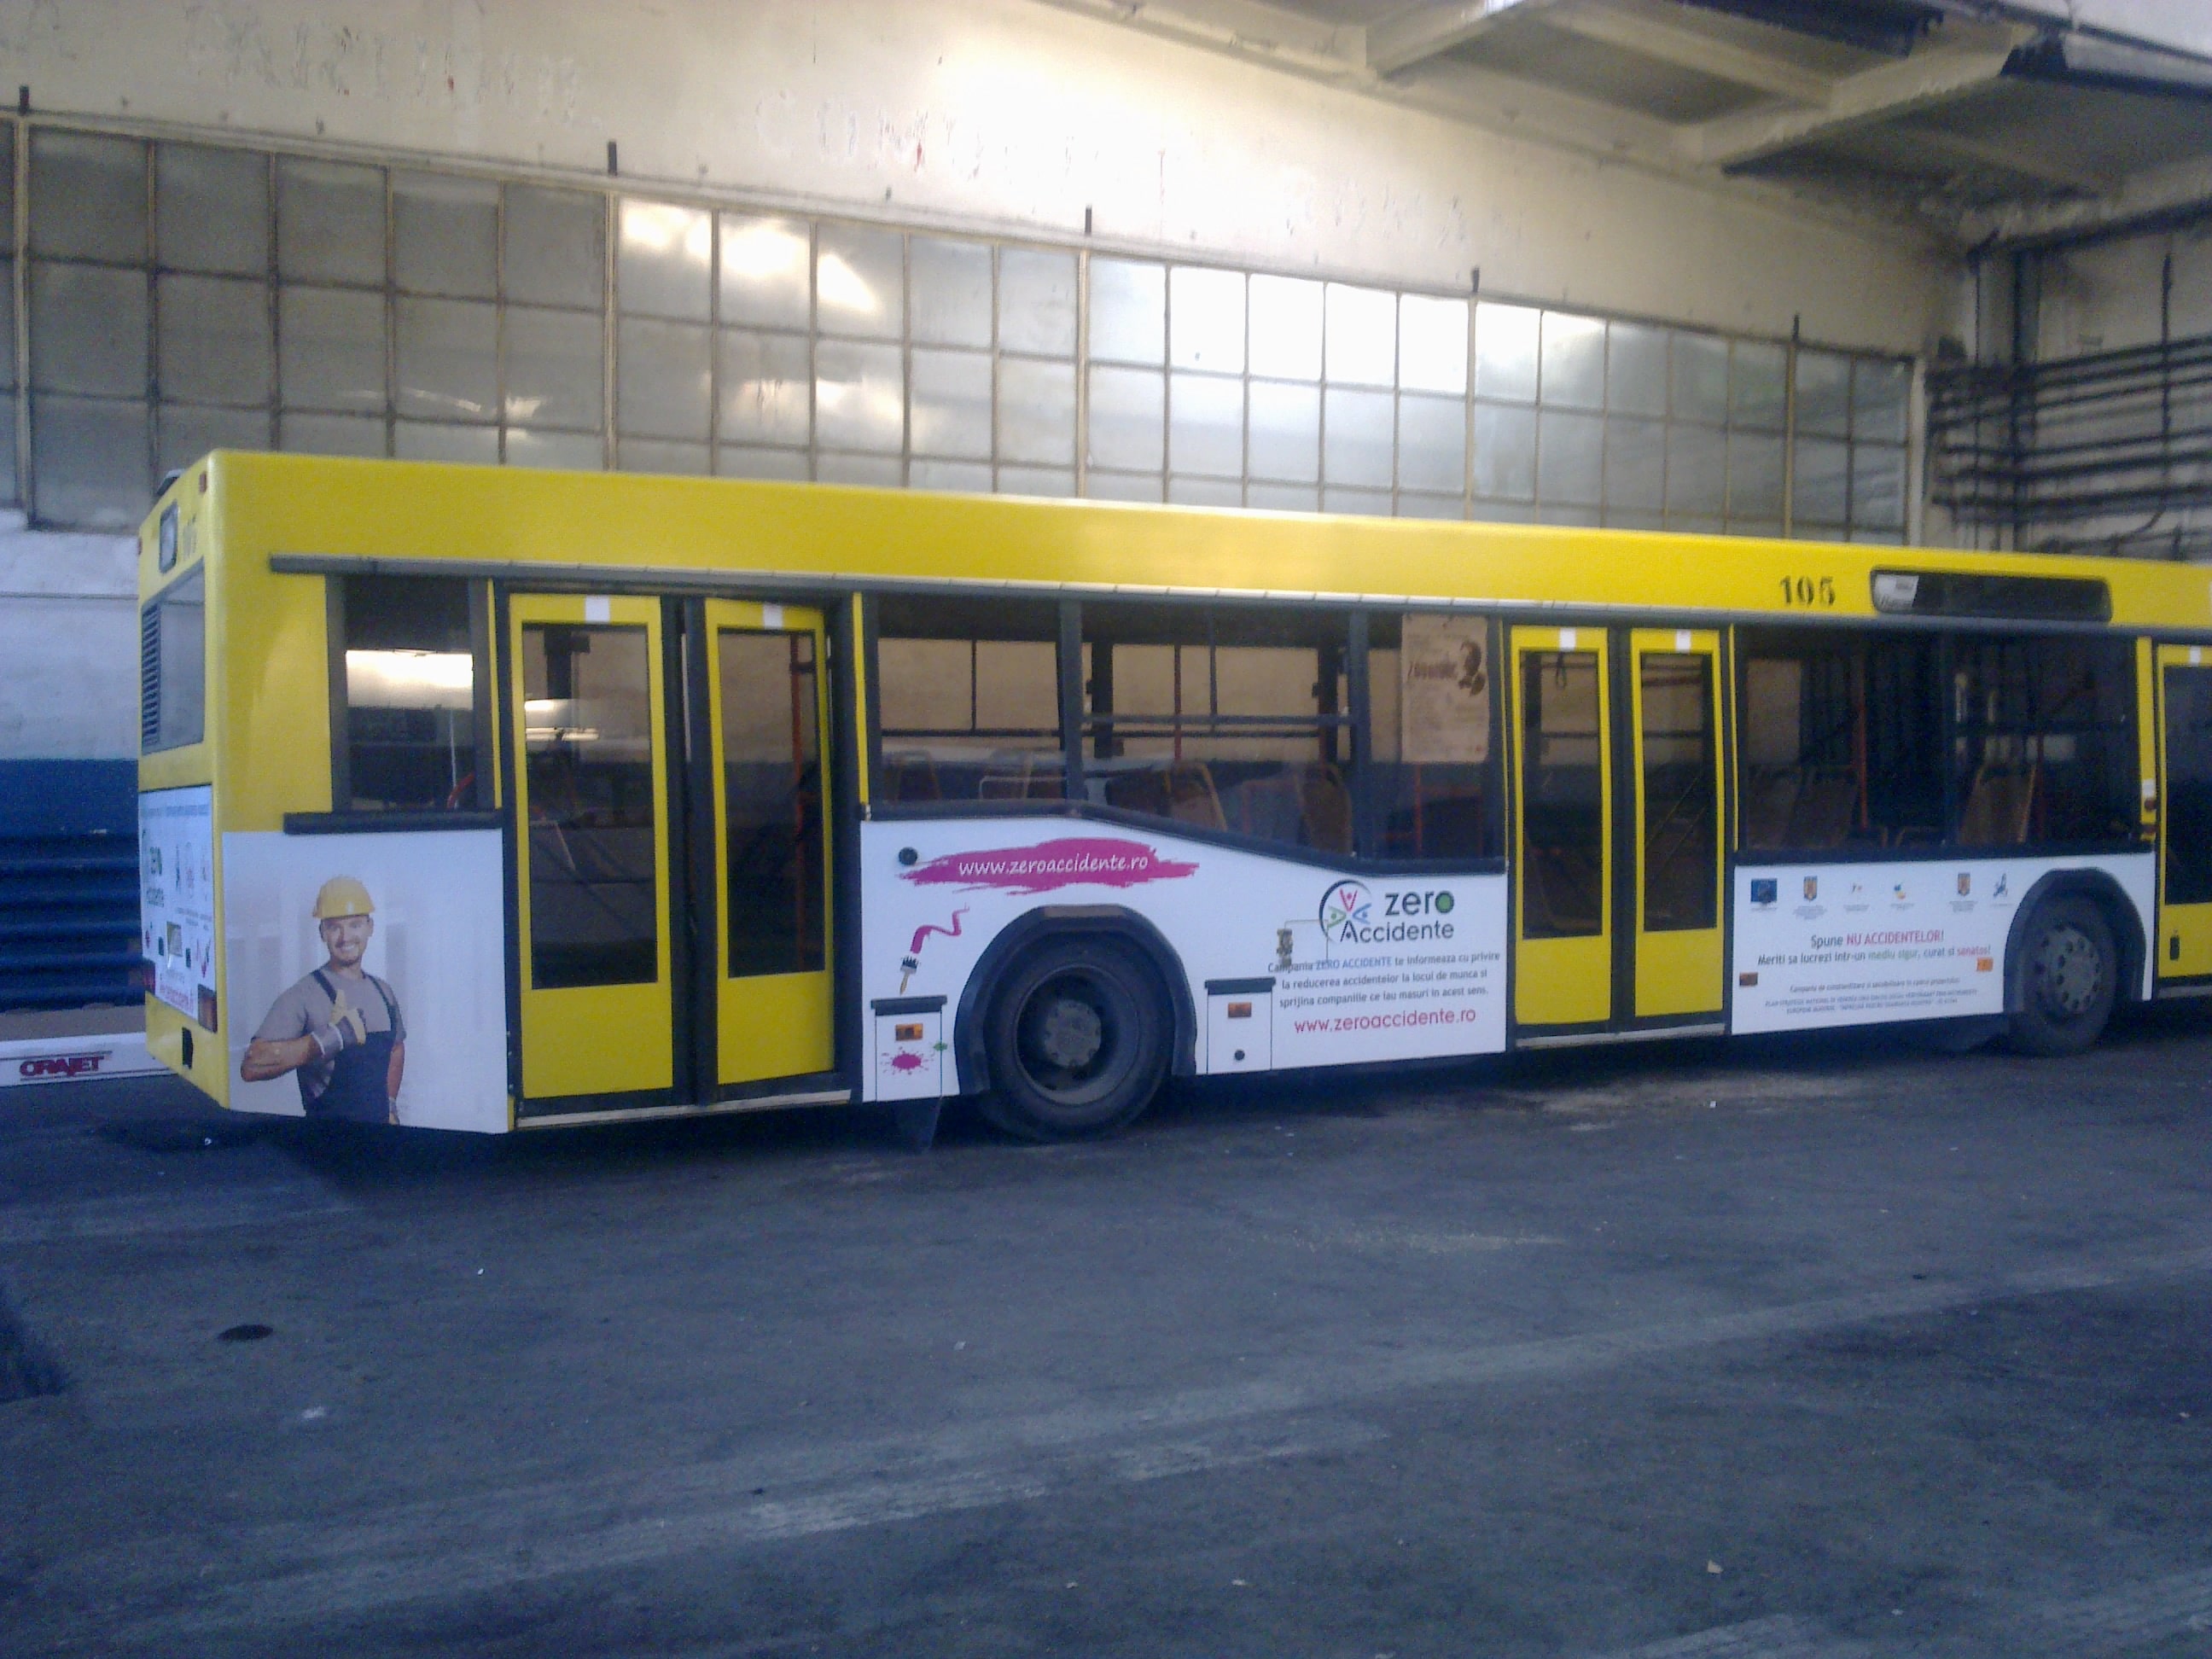 Inscriptionare publicitara autobuz Publitrans s.a. Pitesti